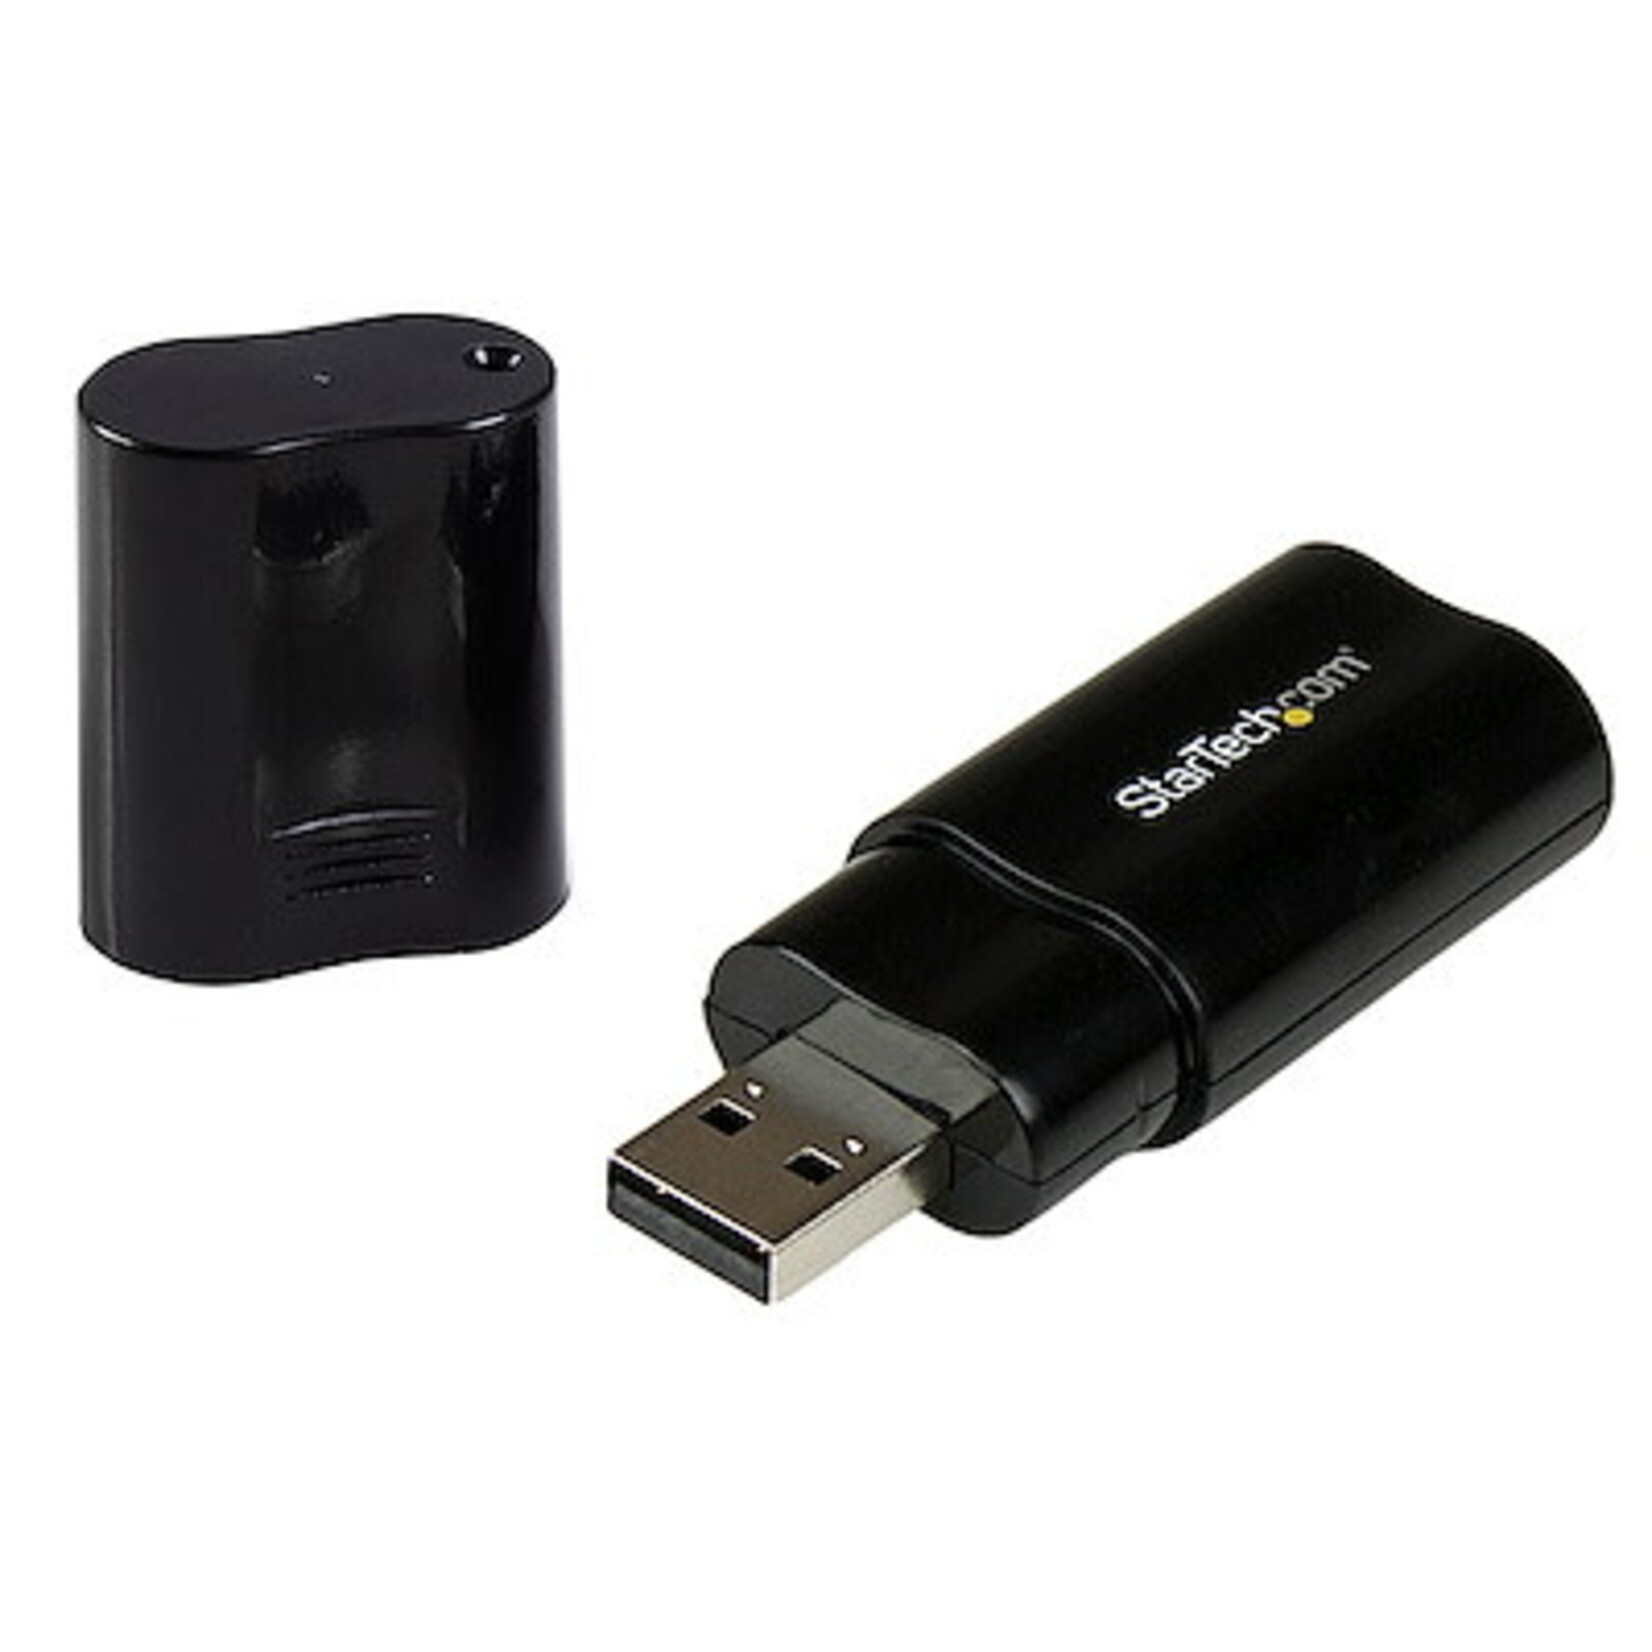 Startech USB2.0 to Audio Adapter Black